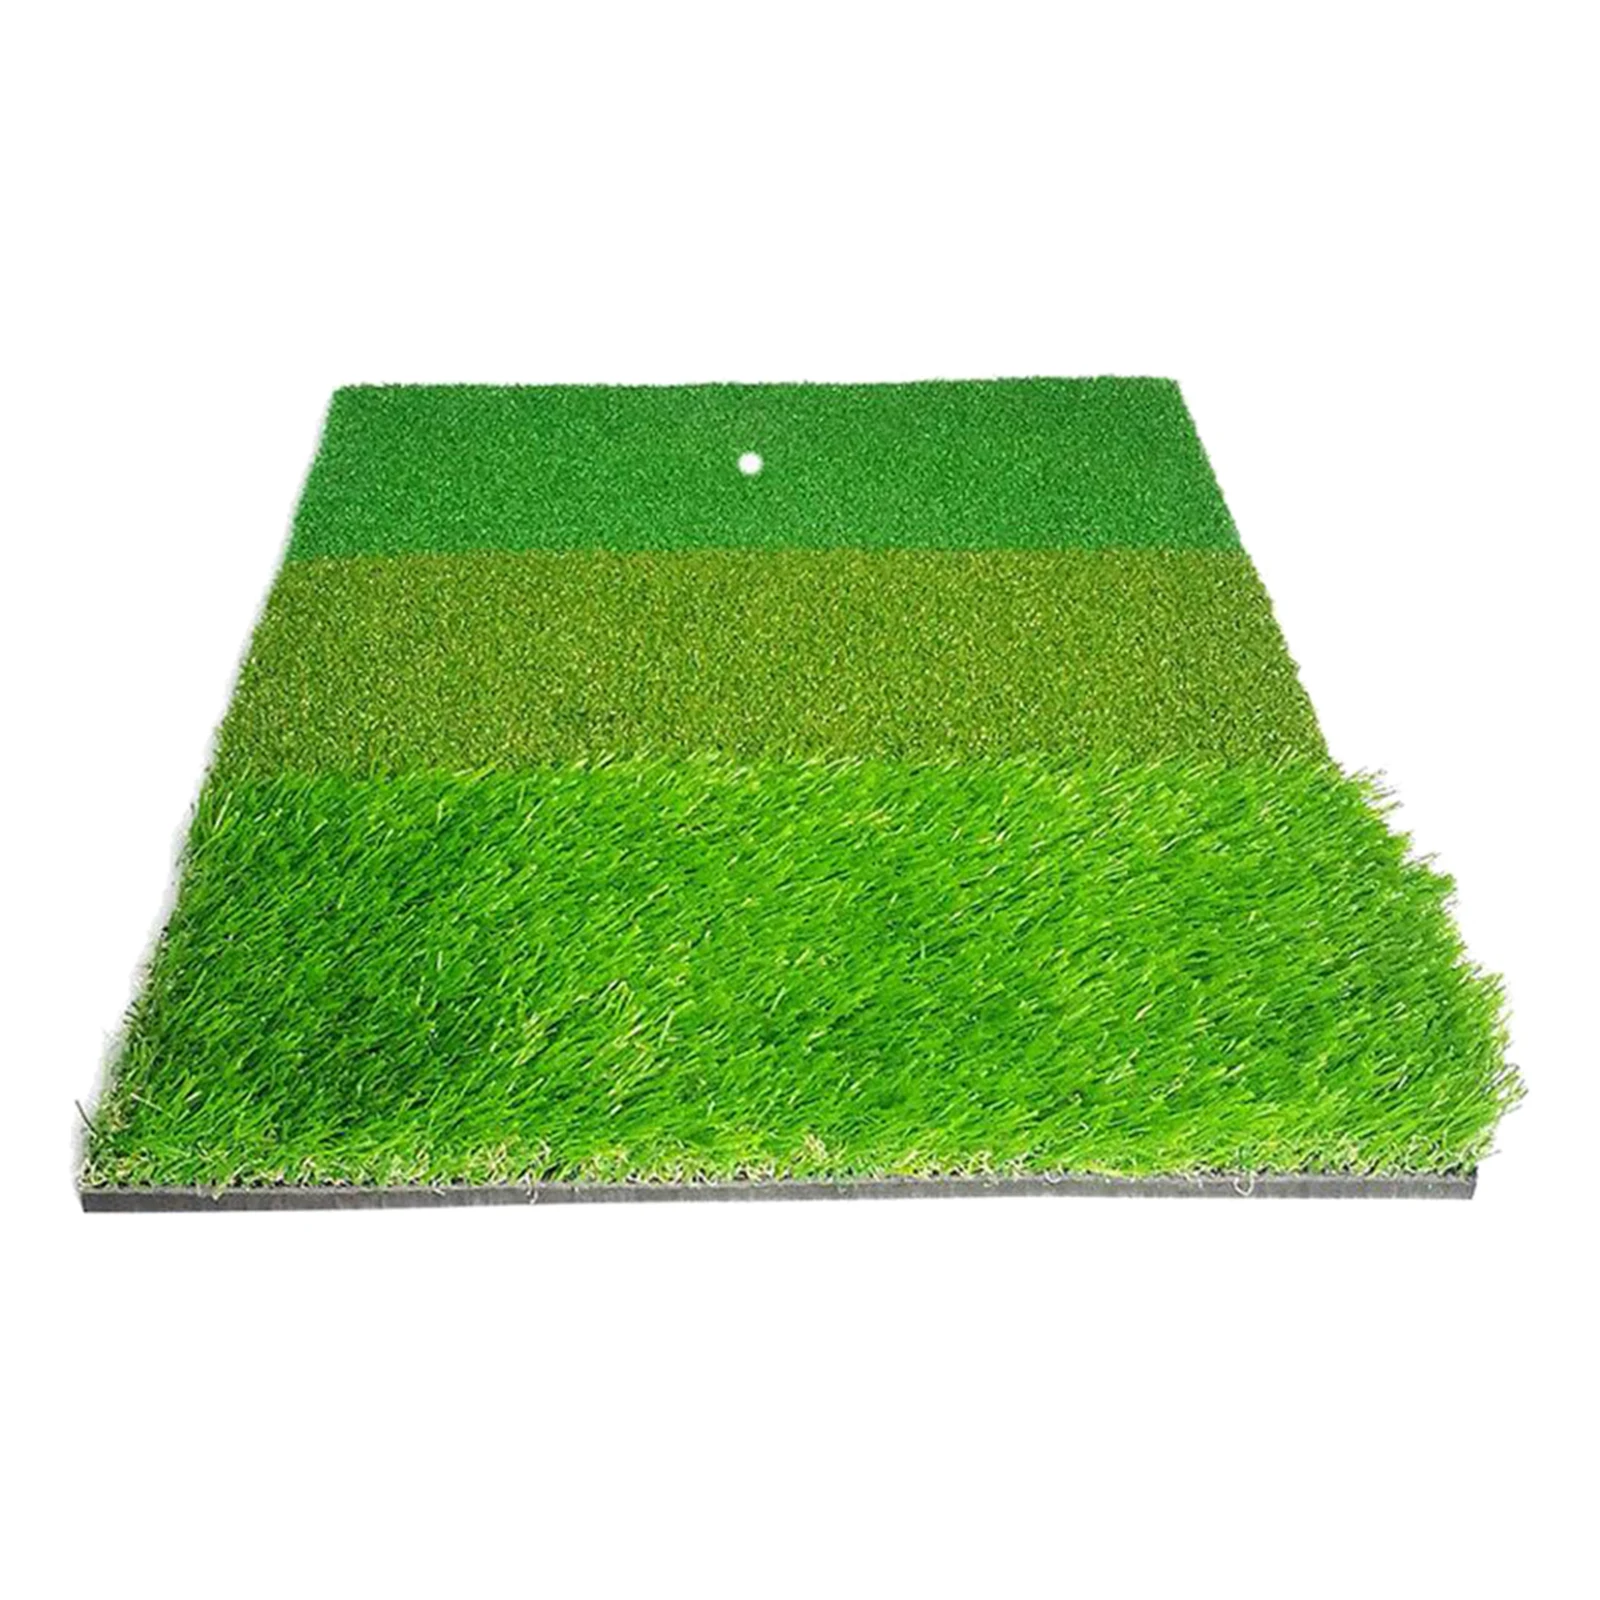 

60x40cm Golf Practice Mat Pad, Durable Golf Backyard Chipping Putting Training Grass Turf Equipment